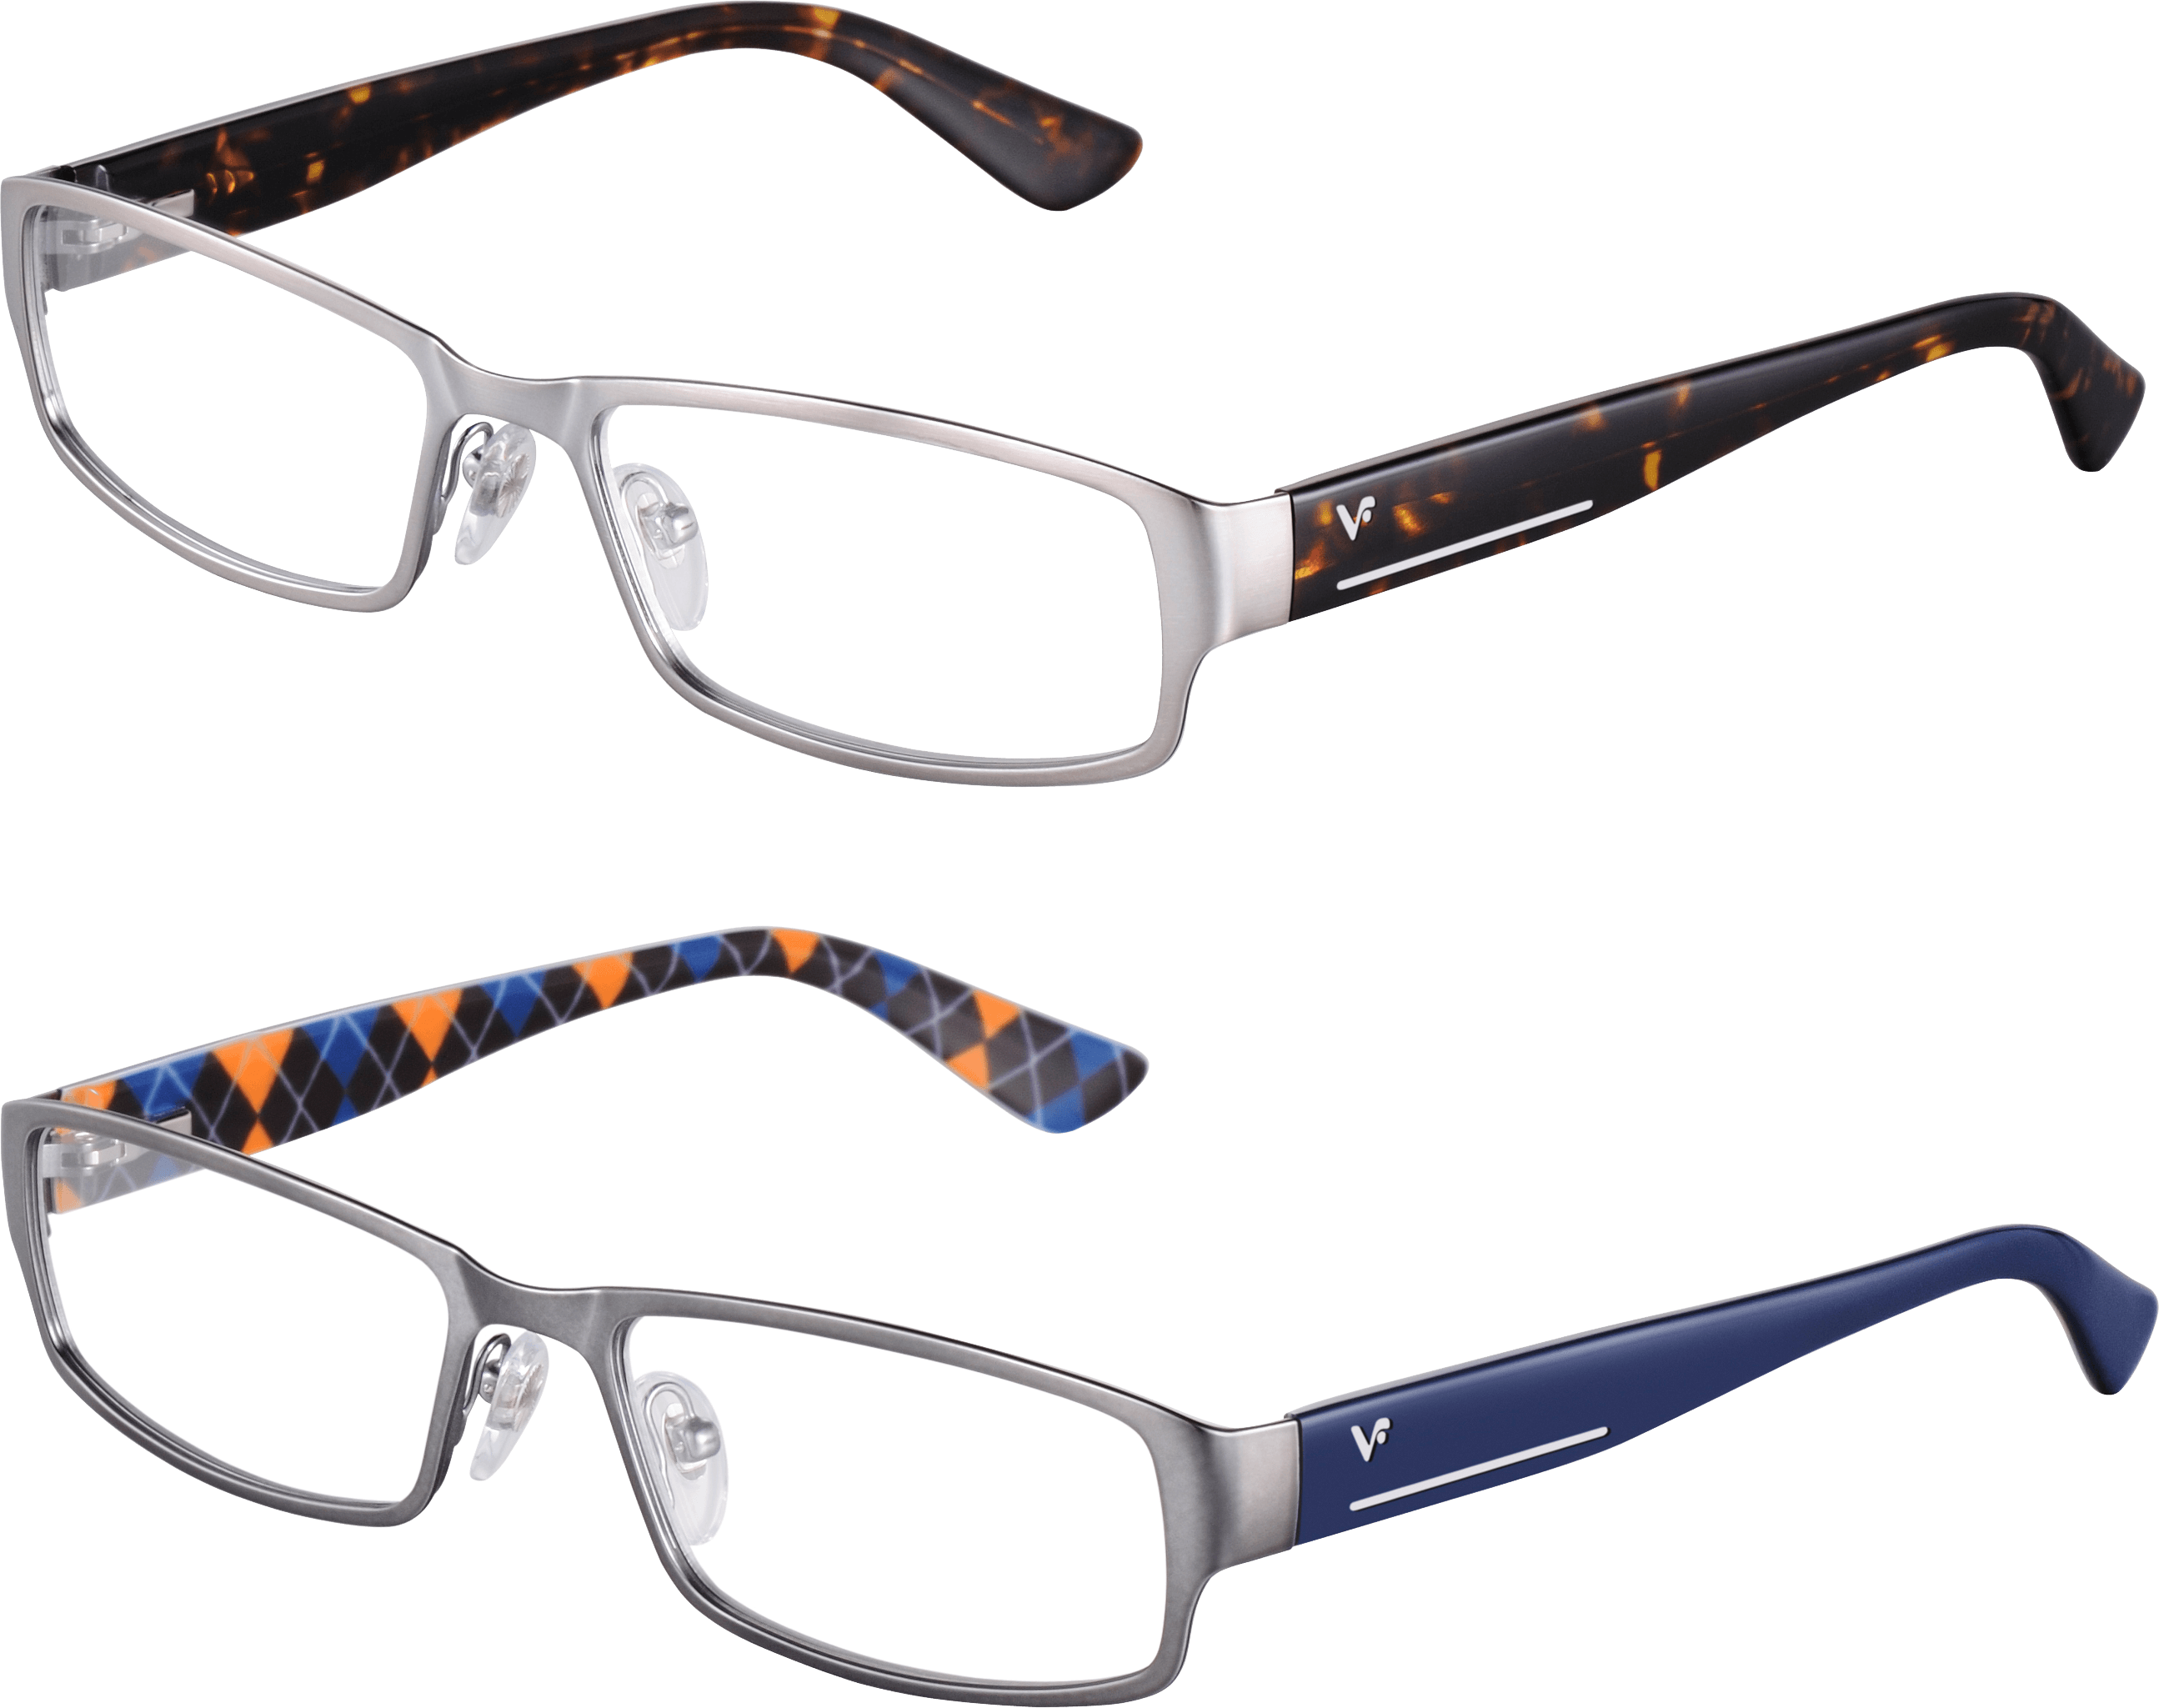 Goggles Optics Glasses HD Image Free PNG Clipart